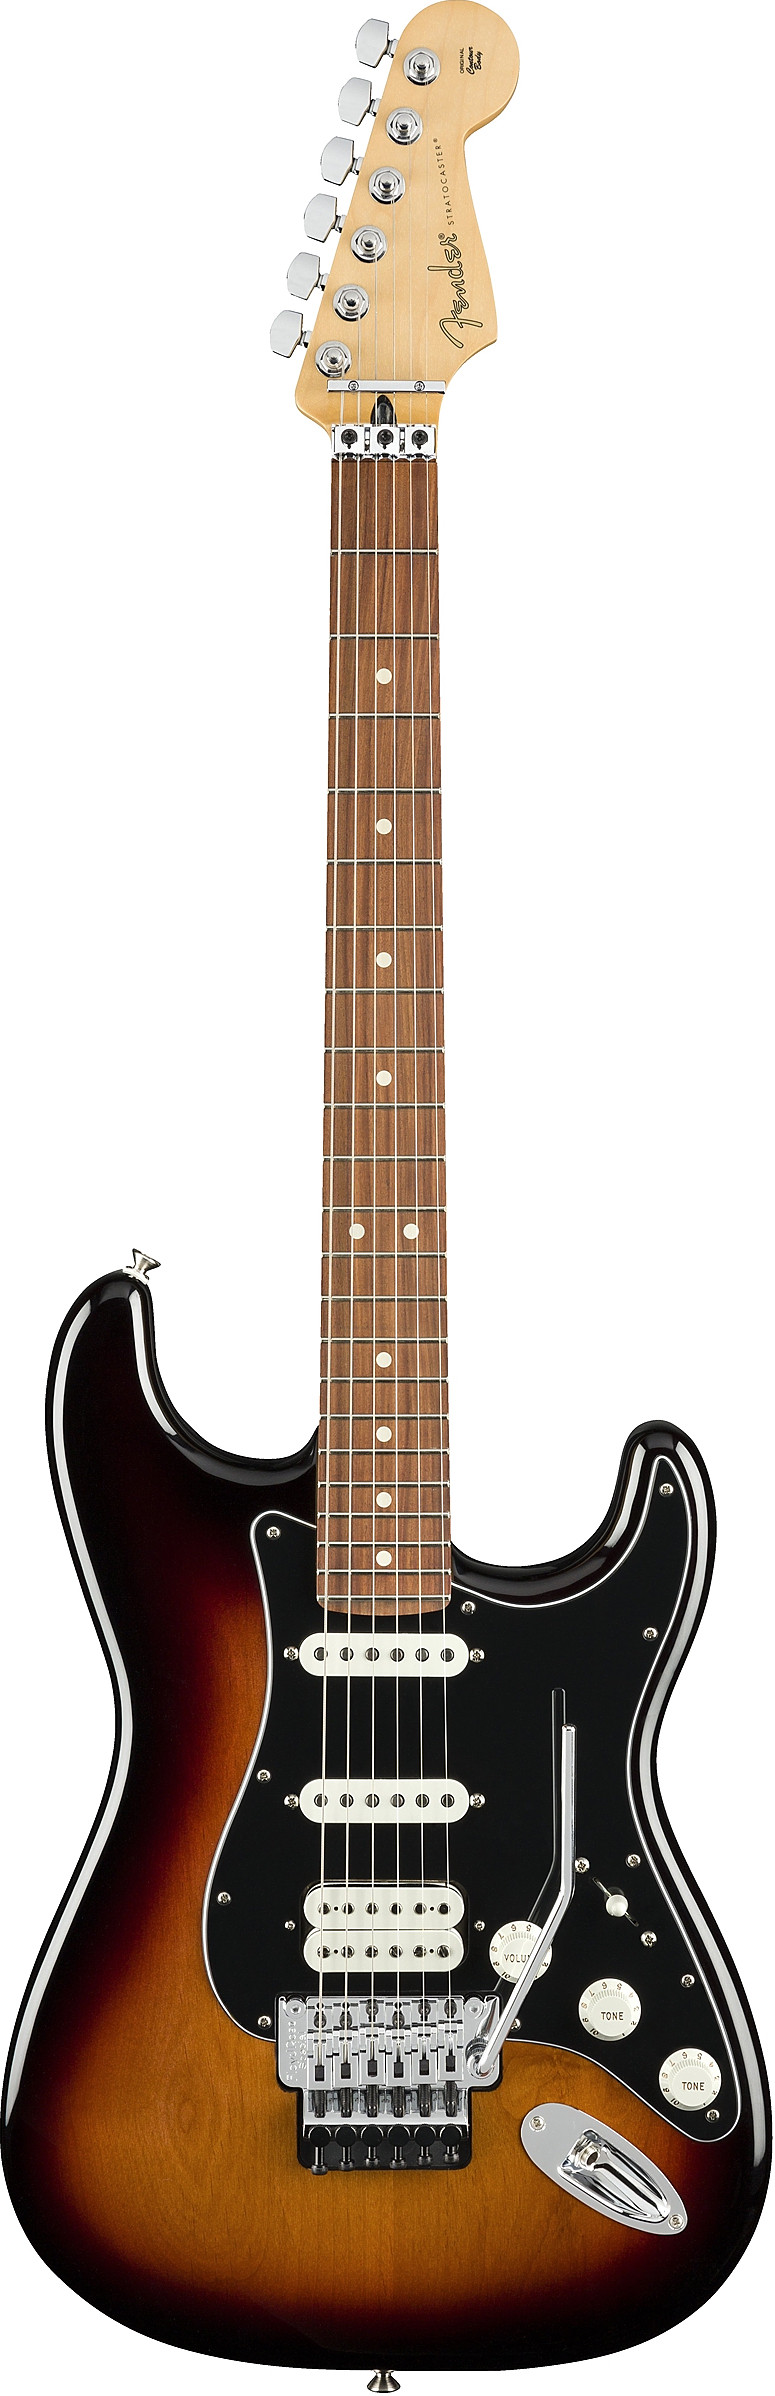 Player Stratocaster� Floyd Rose� HSS by Fender